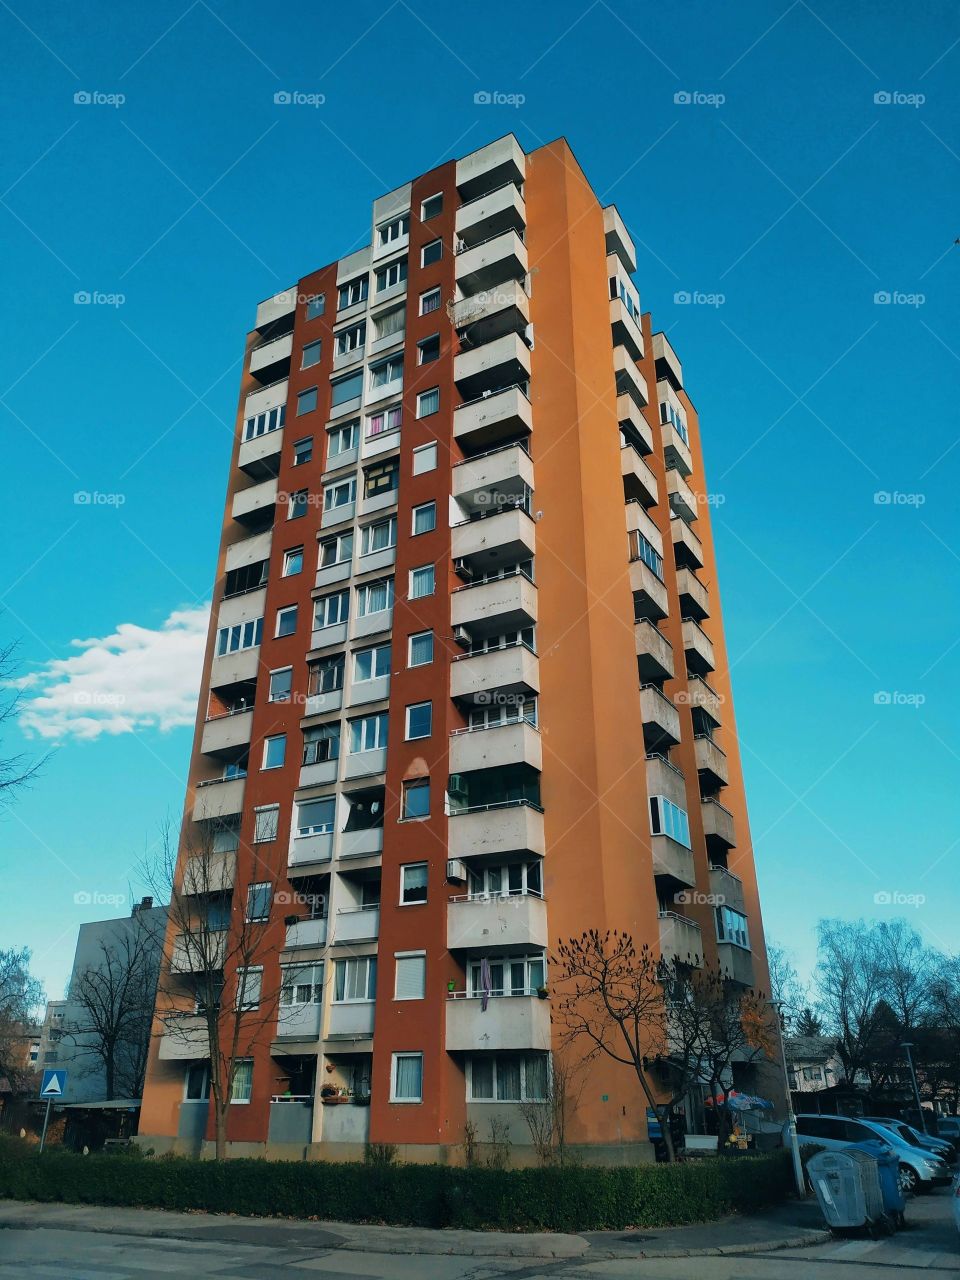 tall orange building